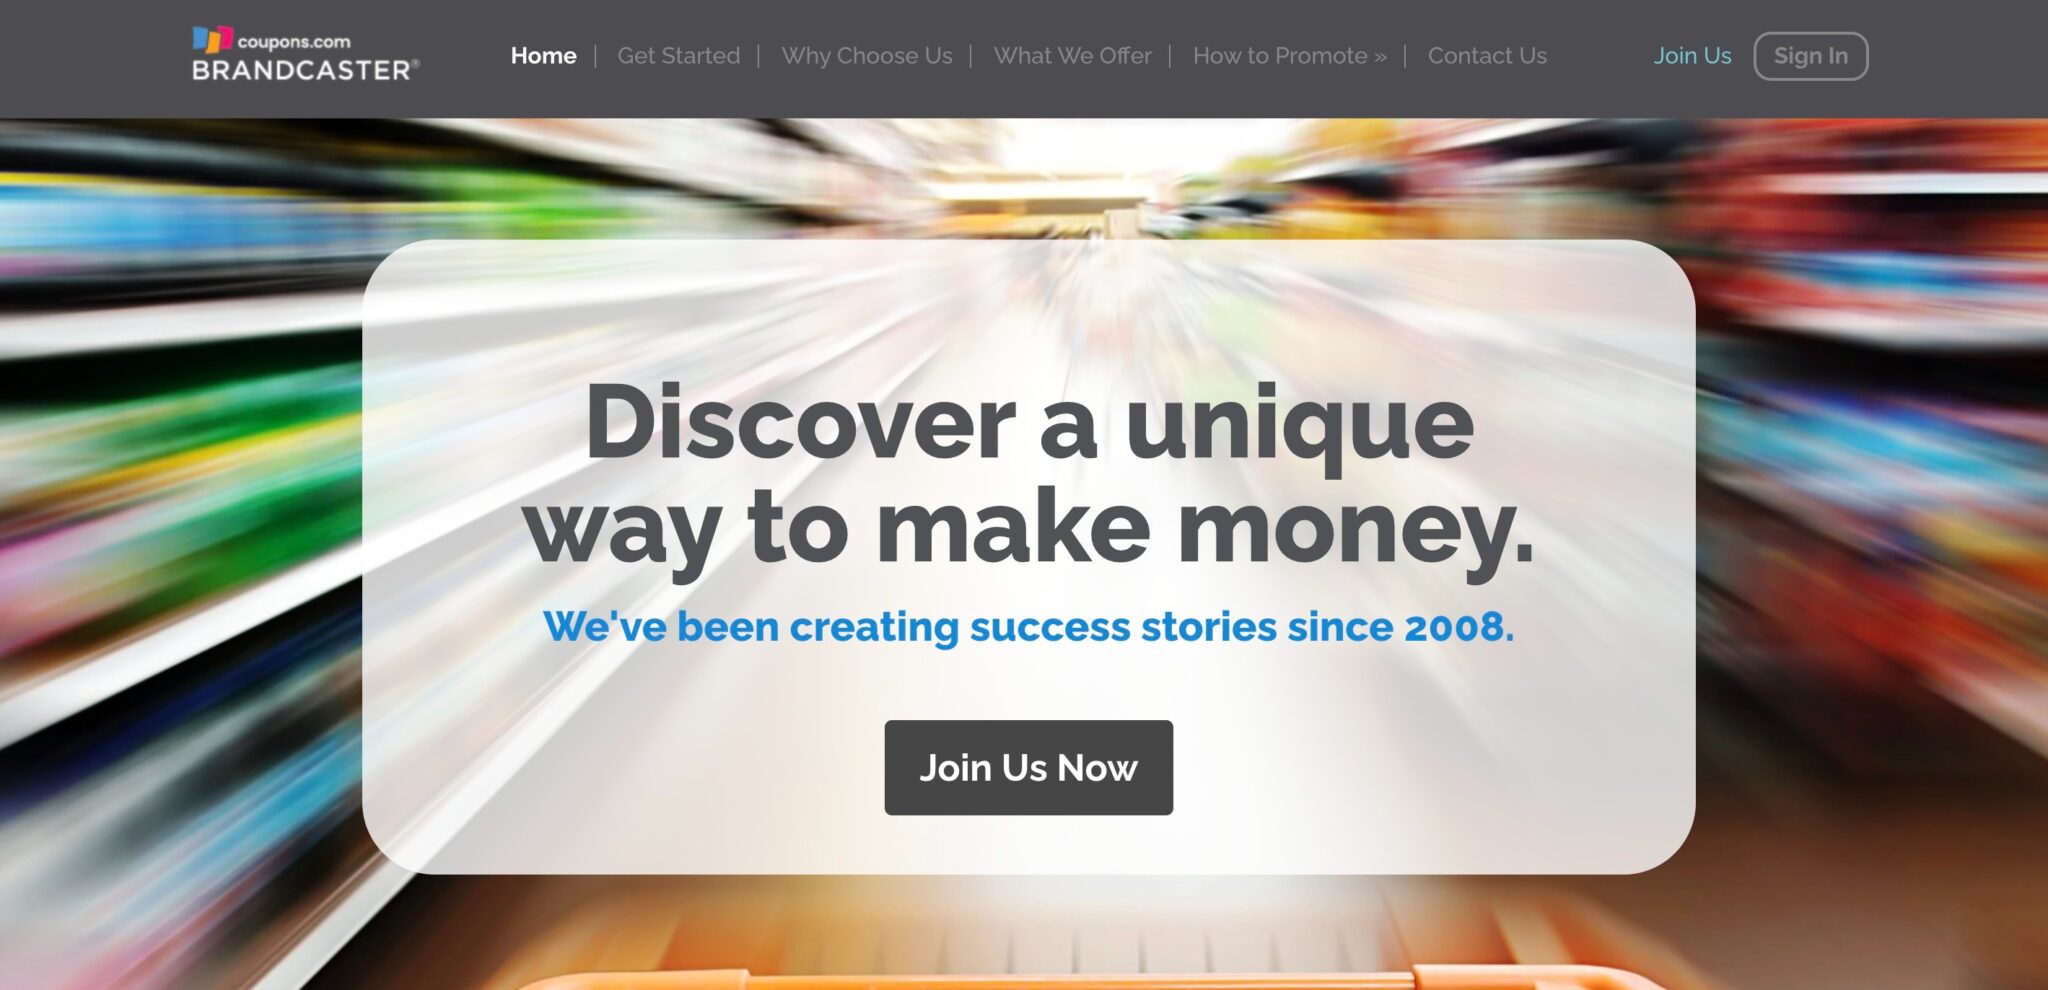 best coupon sites - brandcaster homepage screenshot